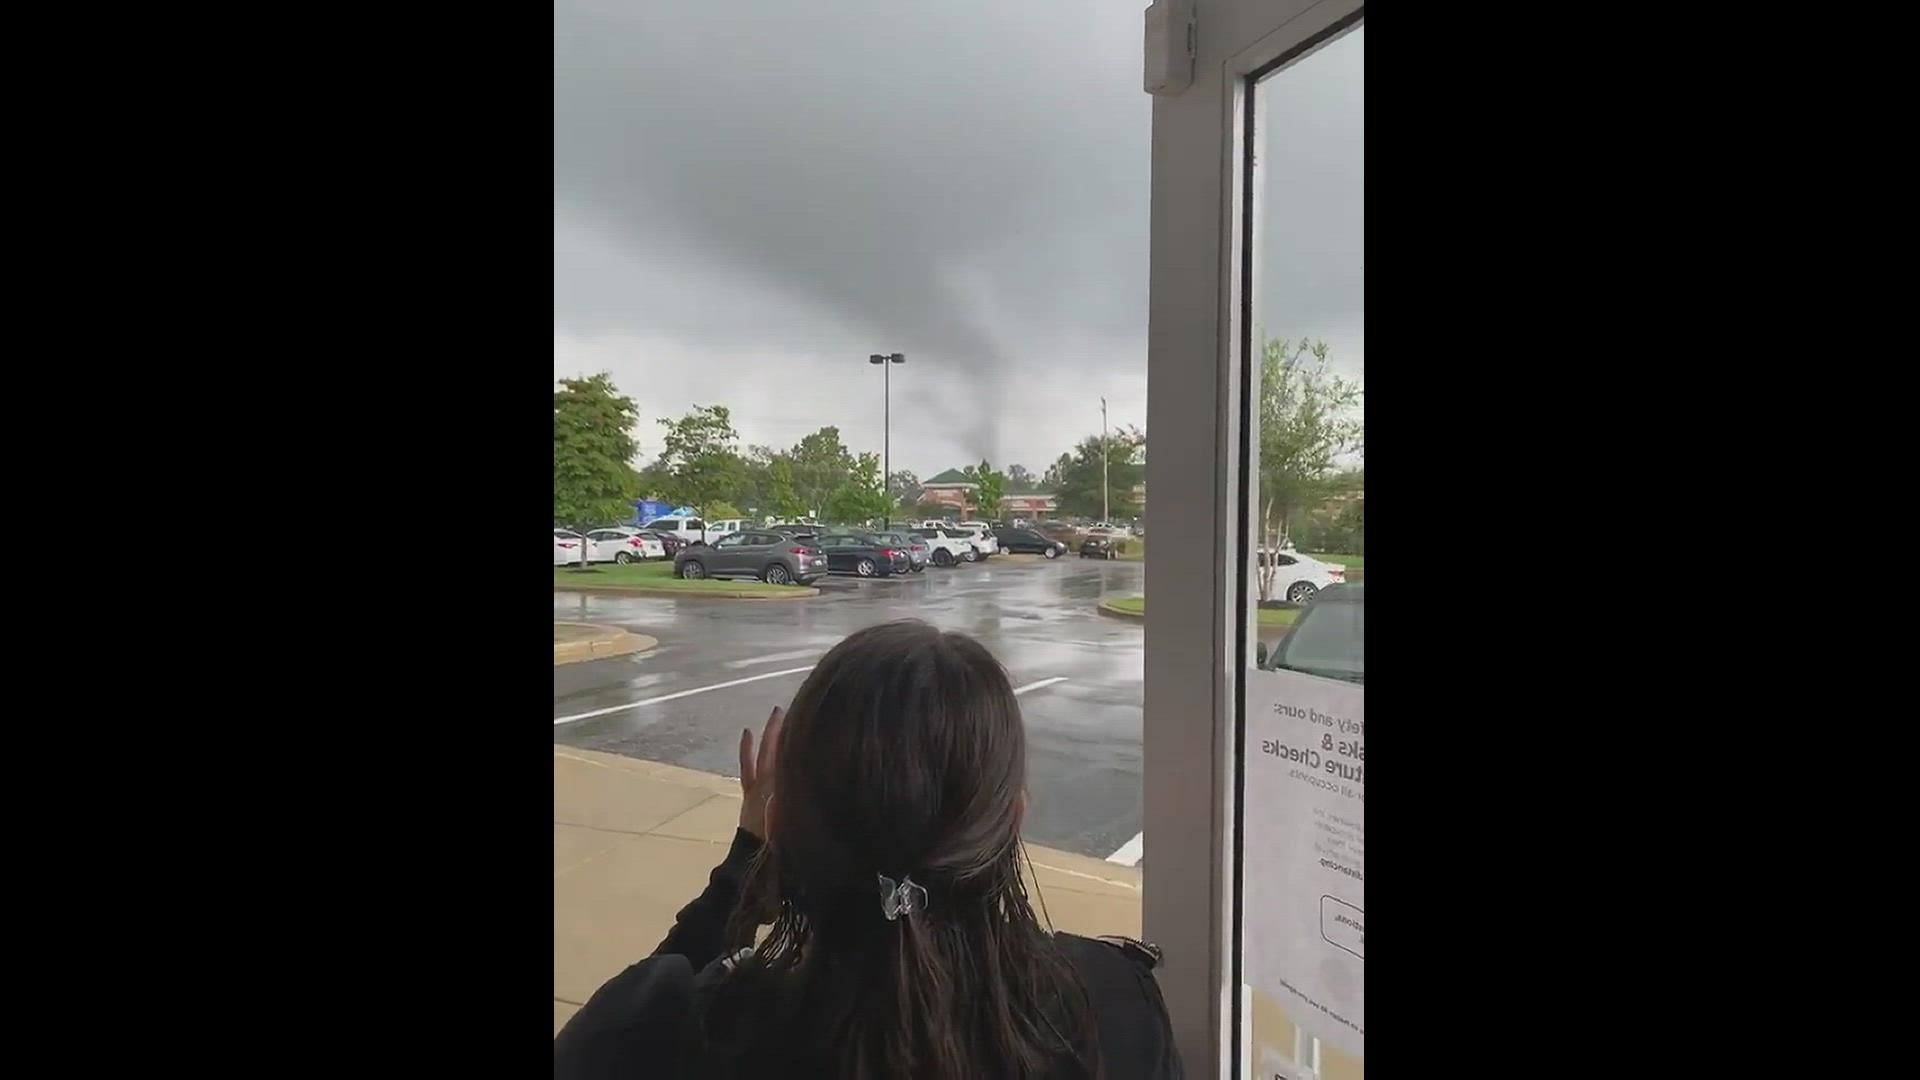 Edgewater MD. Tornado
Credit: Erica Lomax